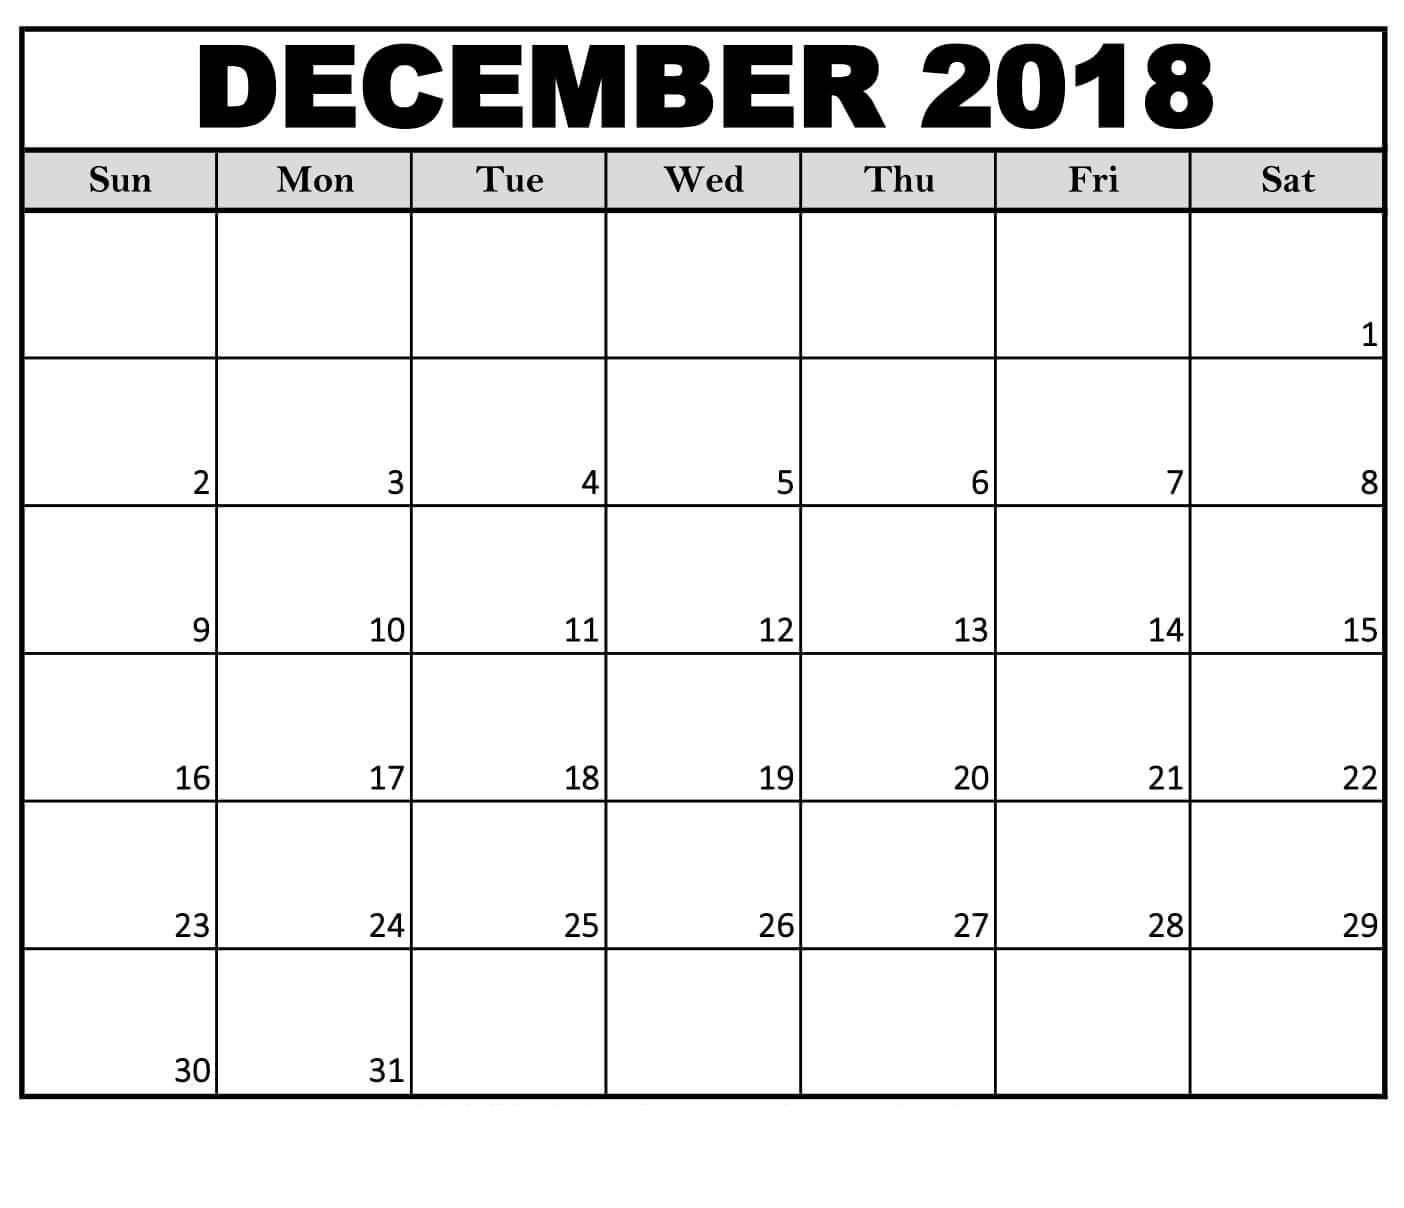 december-2018-calendar-56-templates-of-2018-printable-calendars